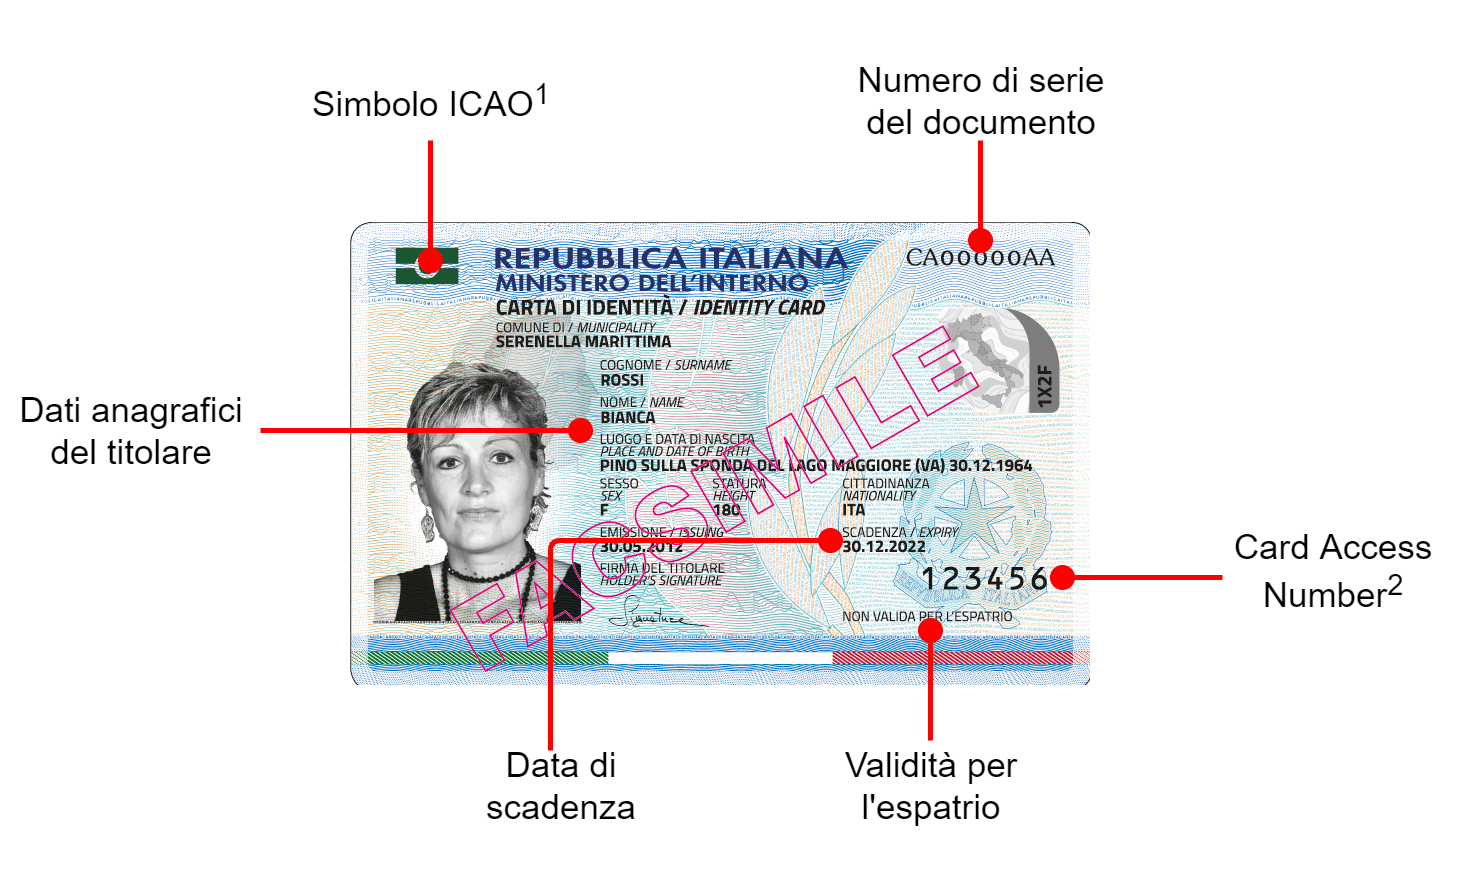 Carta d'identità elettronica